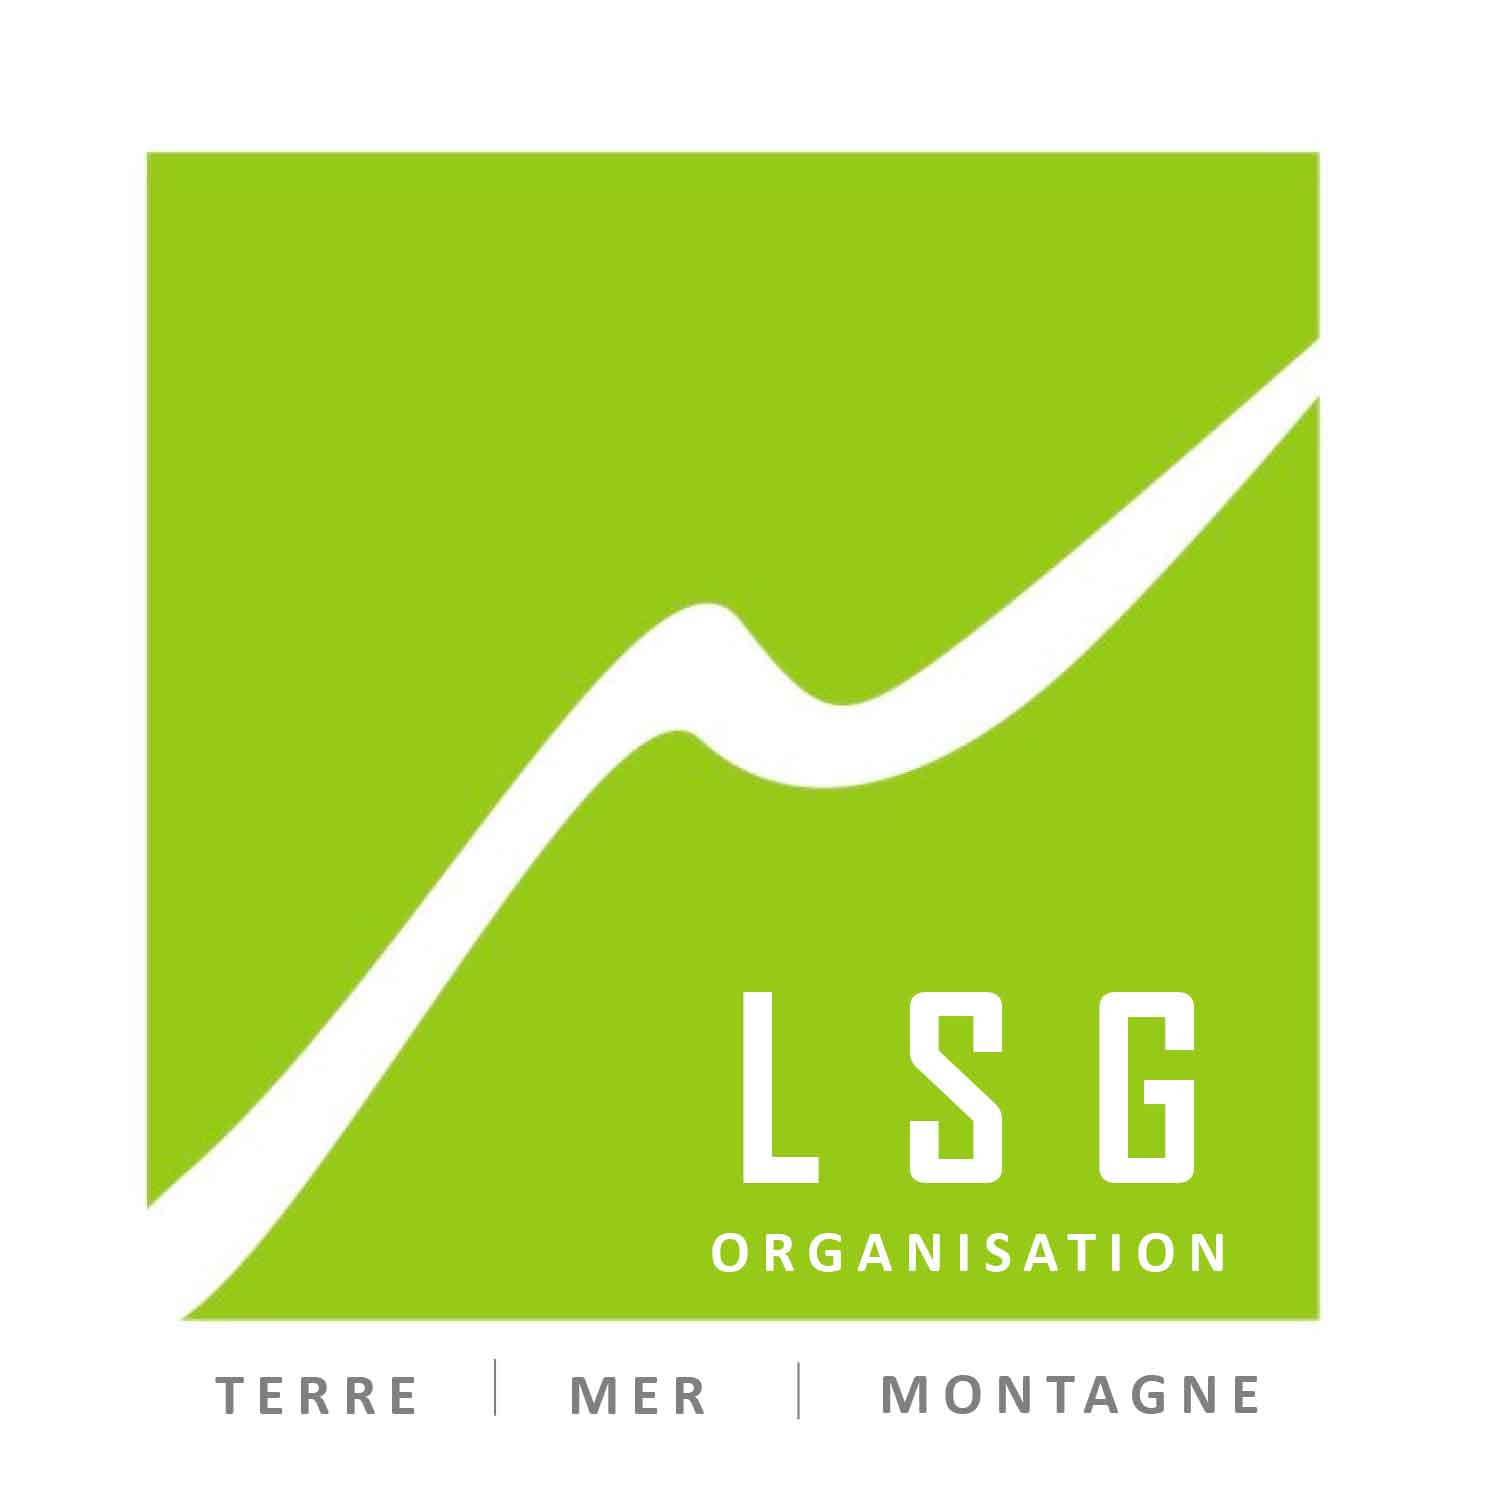 LSG Organisation